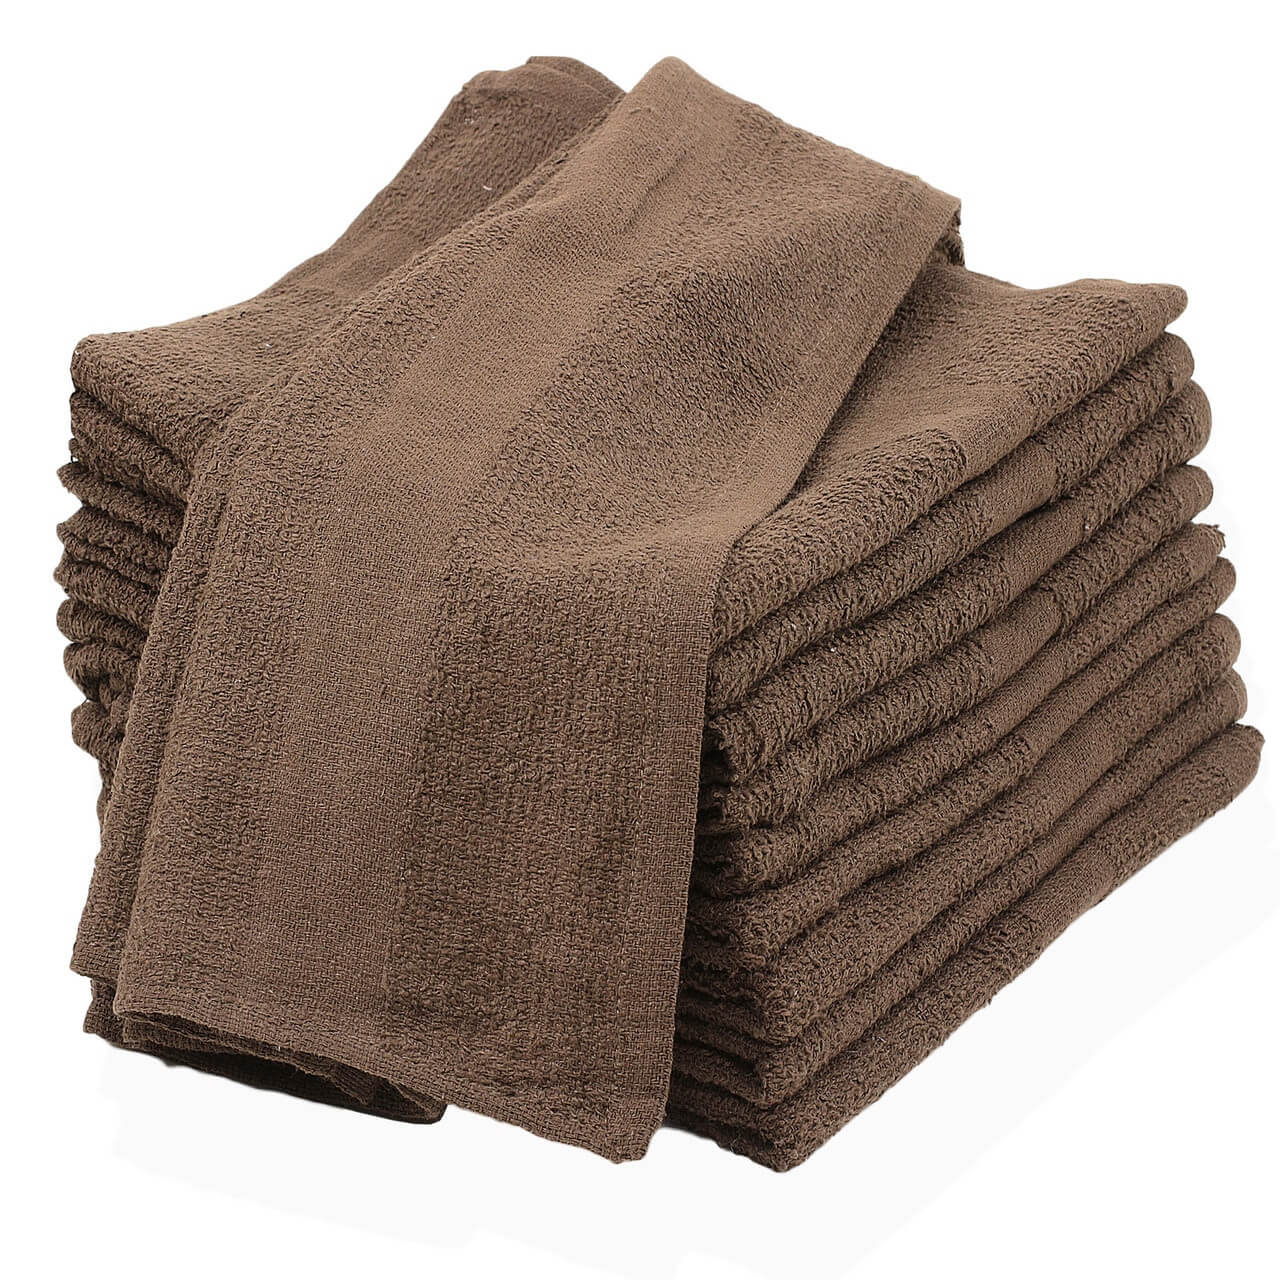 https://www.thetoweldepot.com/wp-content/uploads/2019/05/brown-towels.jpg